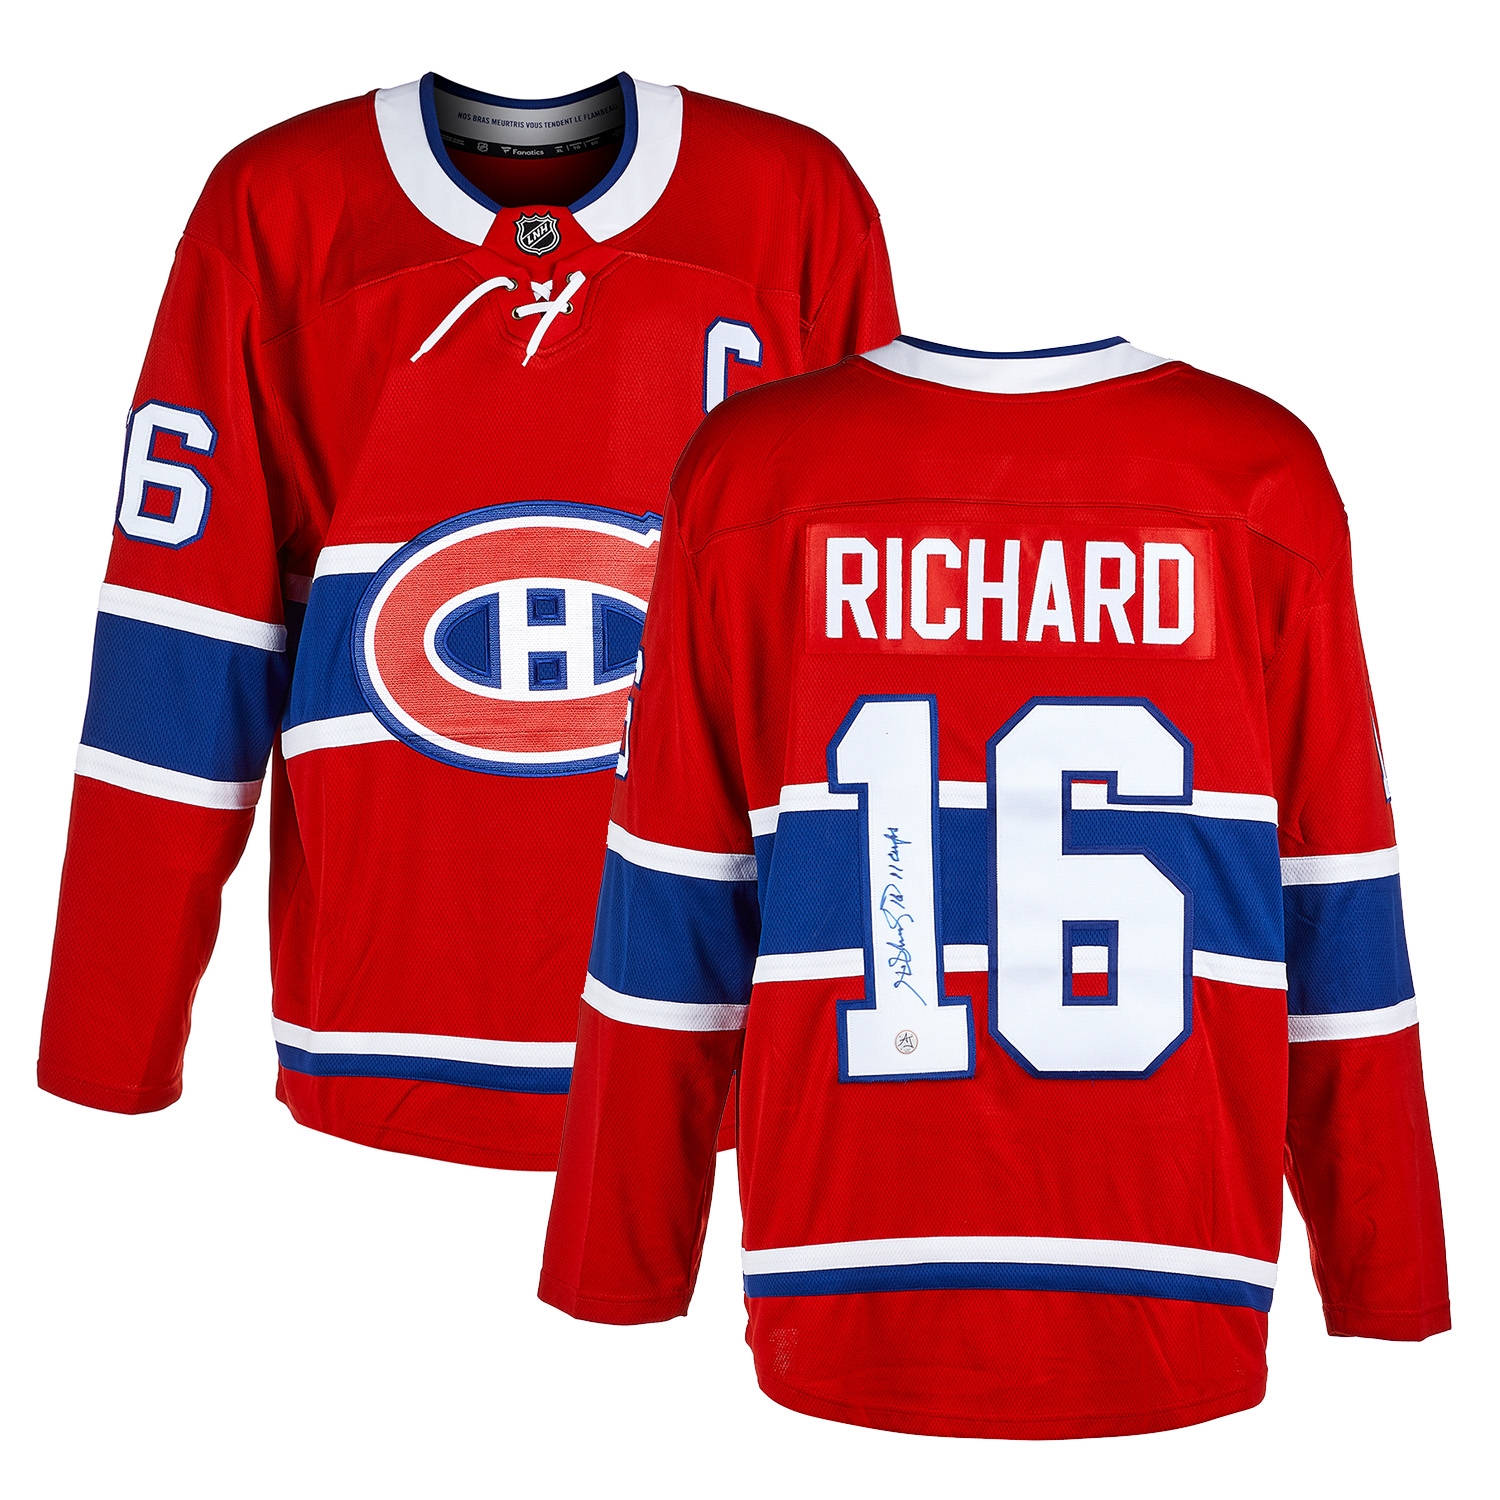 Henri Richard Autographed Montreal Canadiens Fanatics Jersey